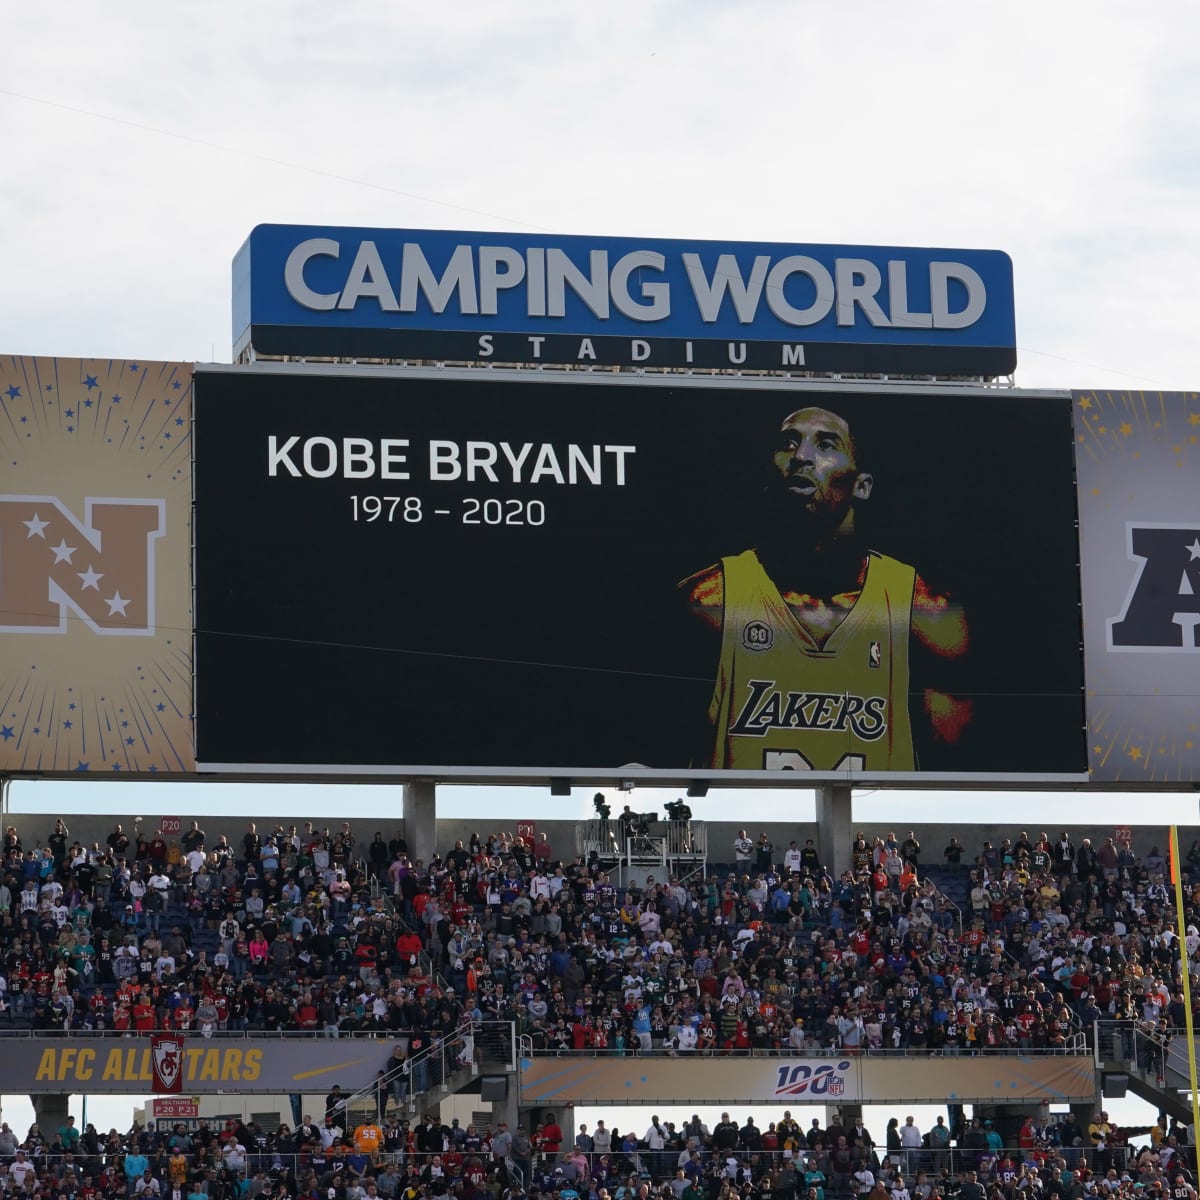 The Philadelphia Eagles got a pep talk from Kobe Bryant during